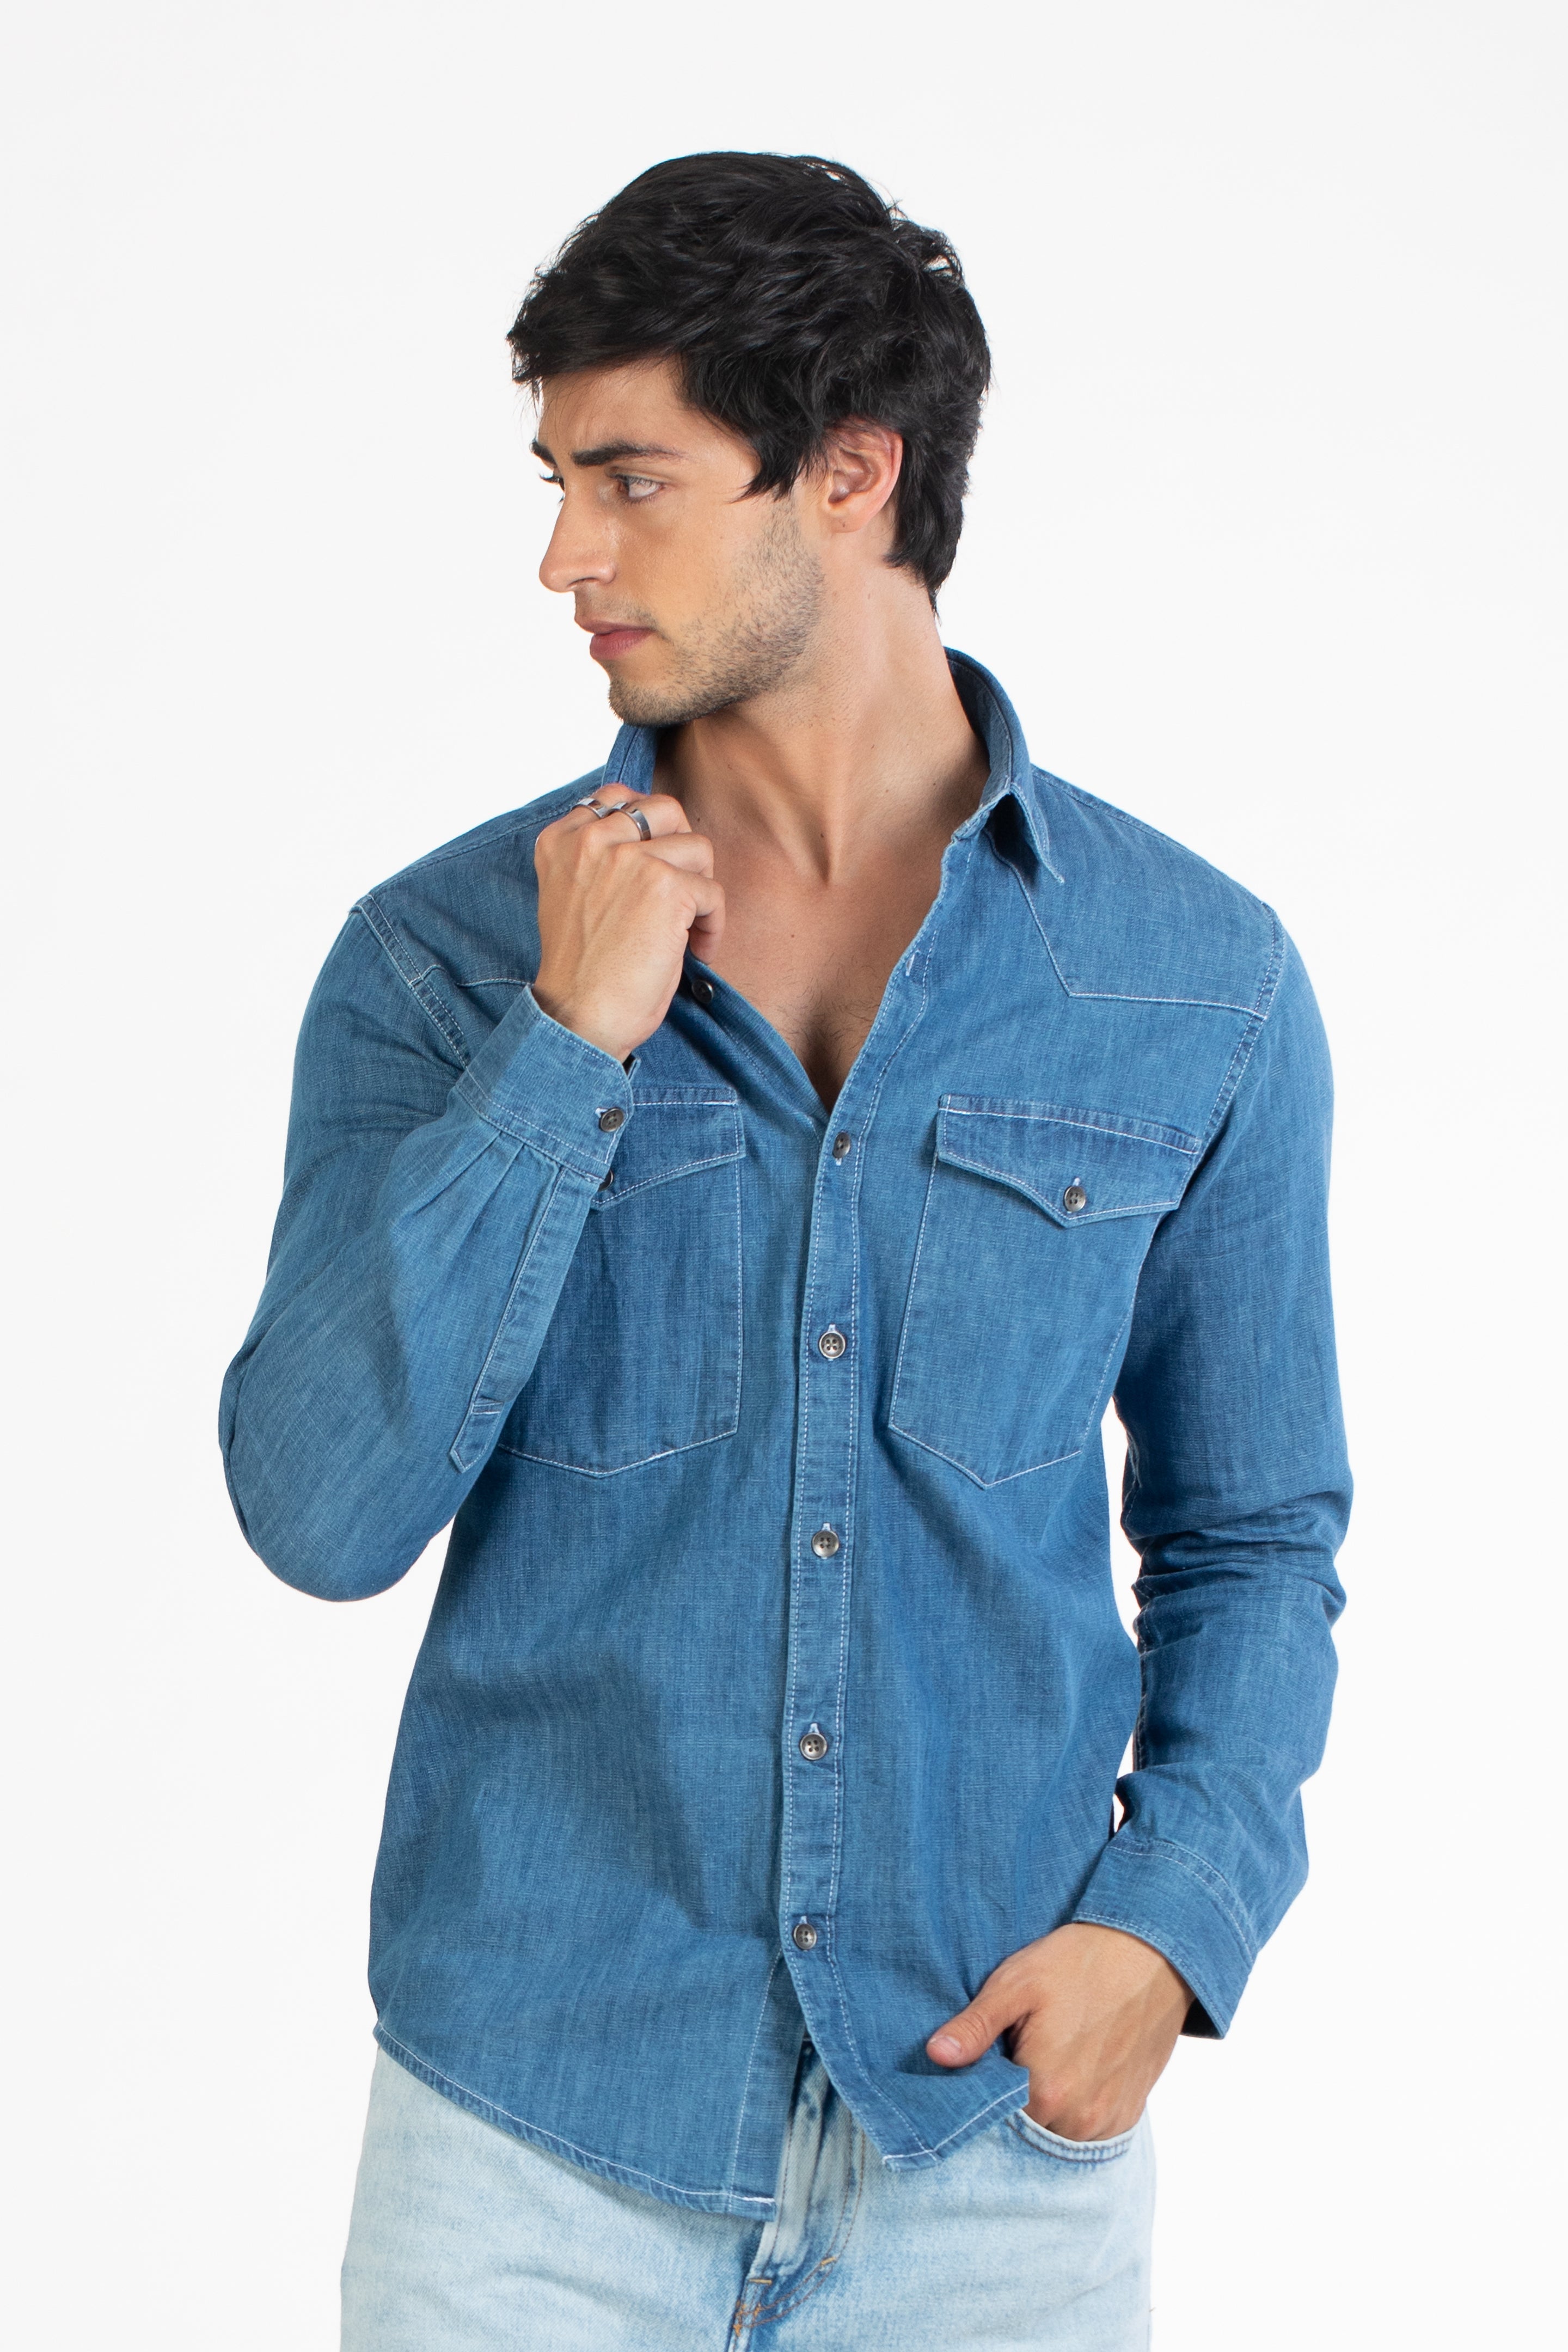 Shop Switz Ice Blue Jeans Shirt for Men Online at Great Price – Badmaash